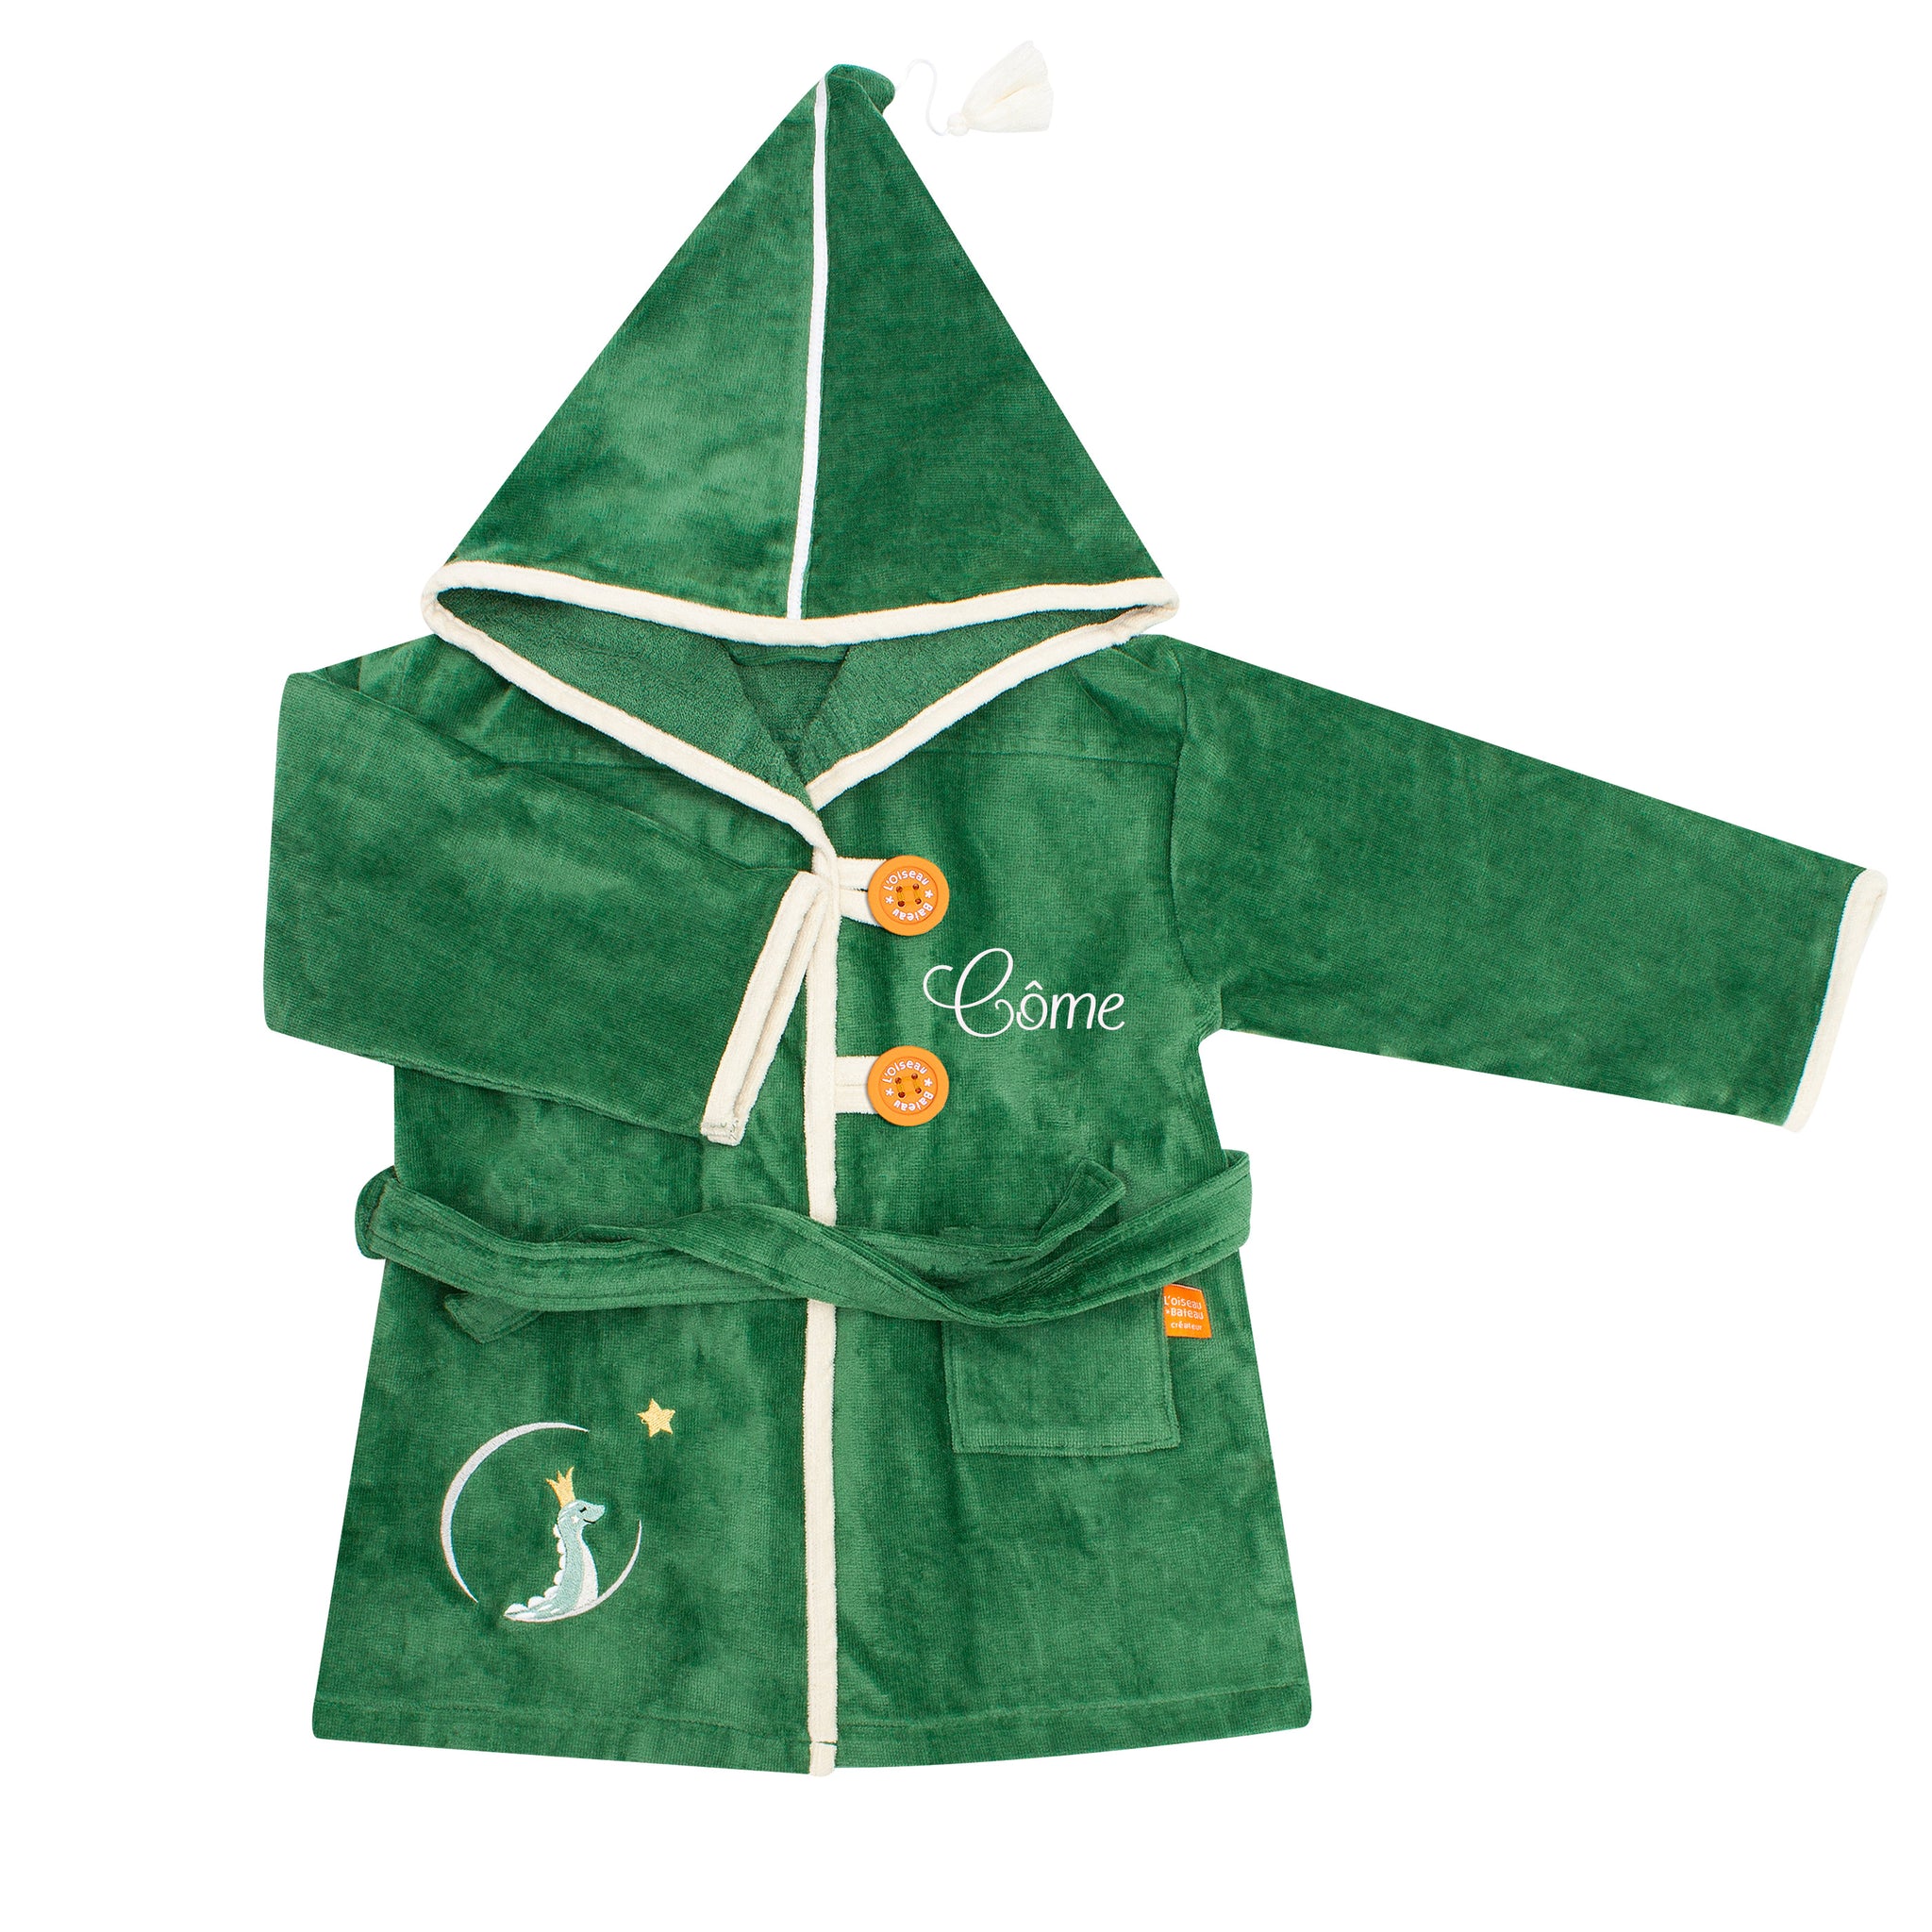 Personalized bathrobe for children - Diplo